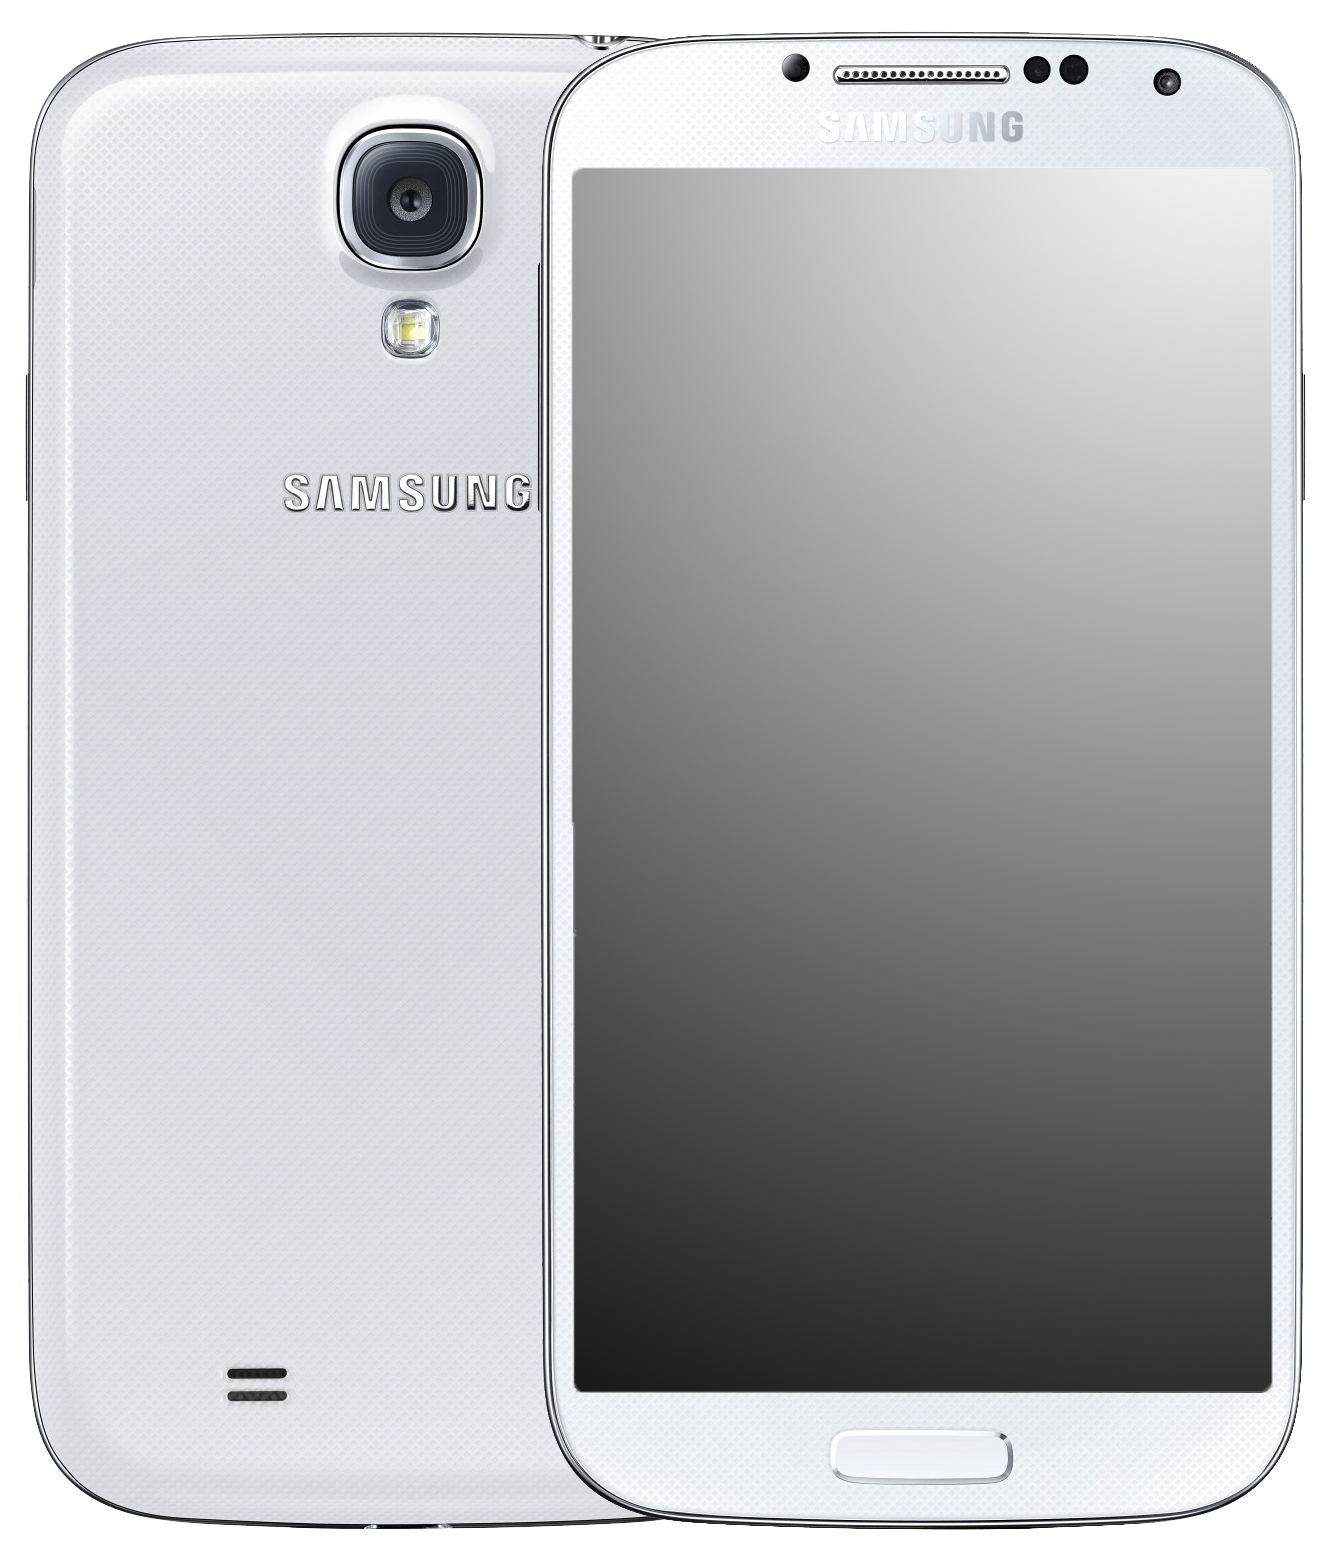 Samsung Galaxy S4 I9505 weiß - Onhe Vertrag